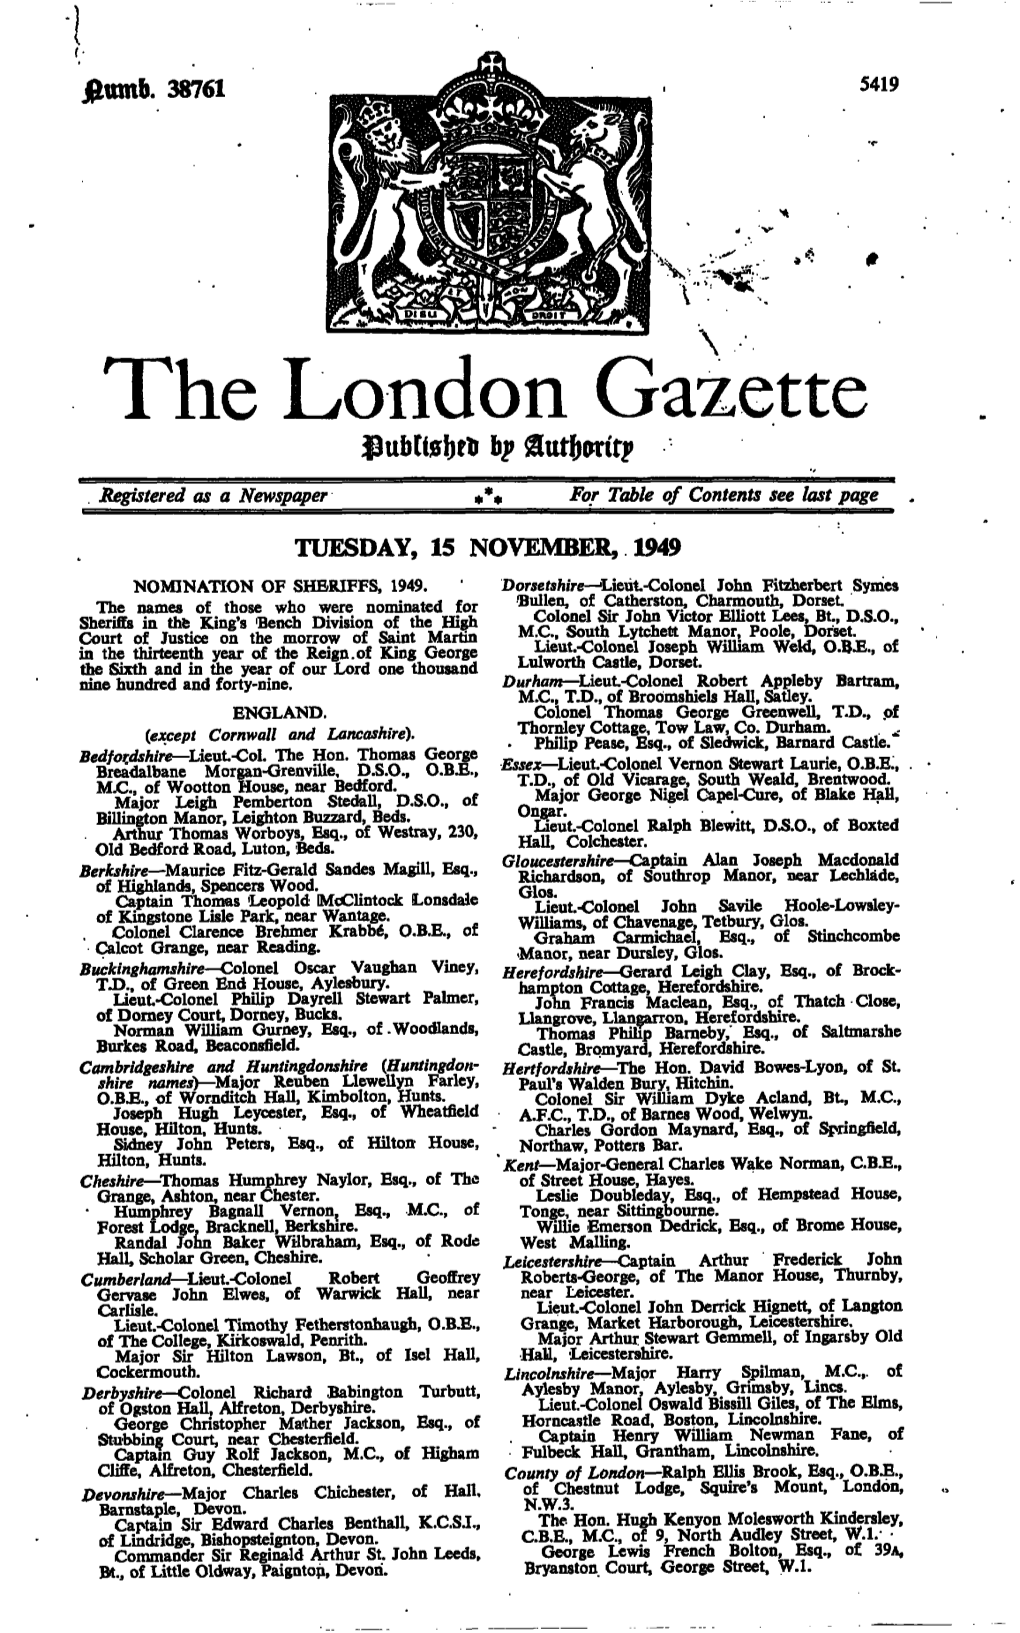 The London Gazette Jjubtteljr* Bf Sut&Wtrp